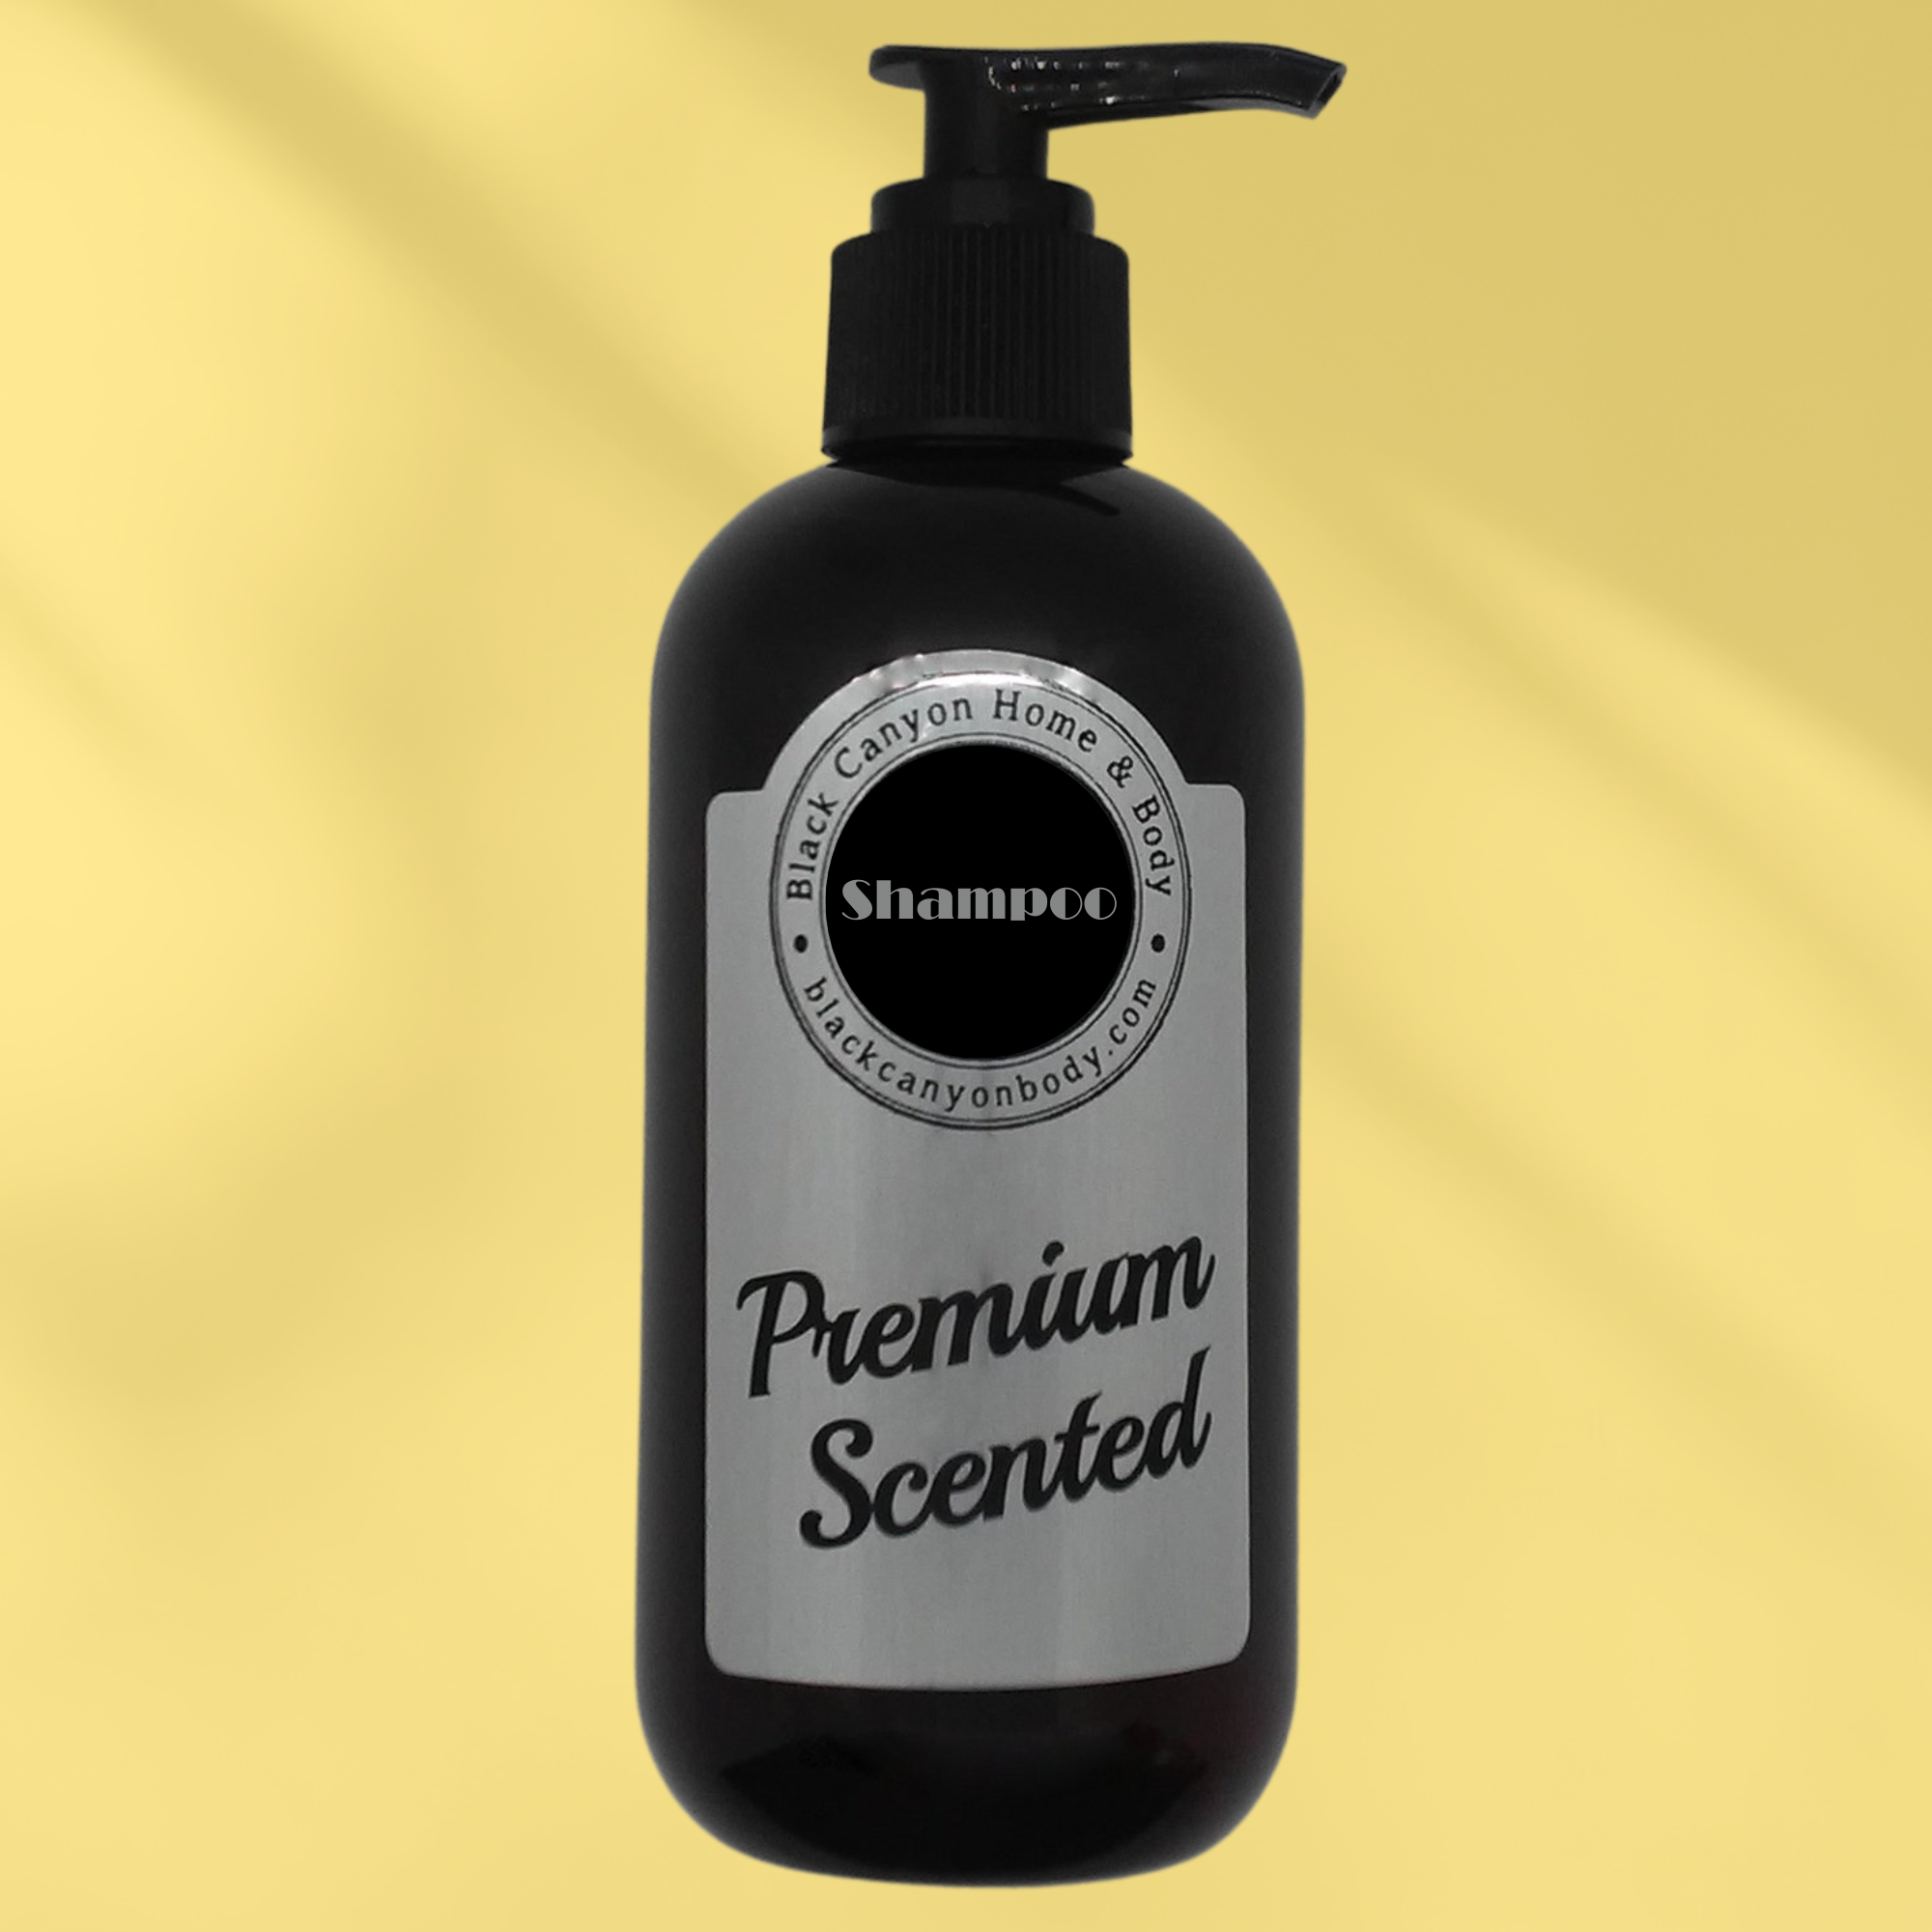 Paydens Cobalt Cedarwood & Citrus Scented Shampoo with Argan Oil For Men